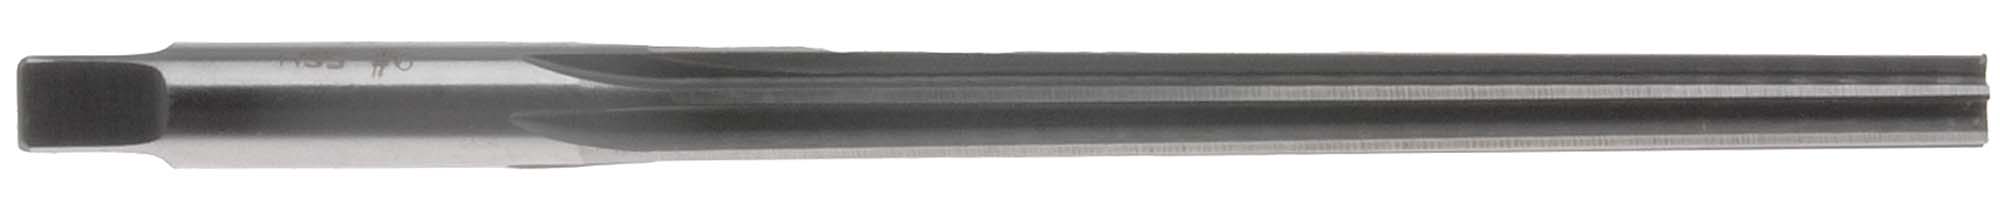 #7 Straight Flute Taper Pin Reamer, High Speed Steel